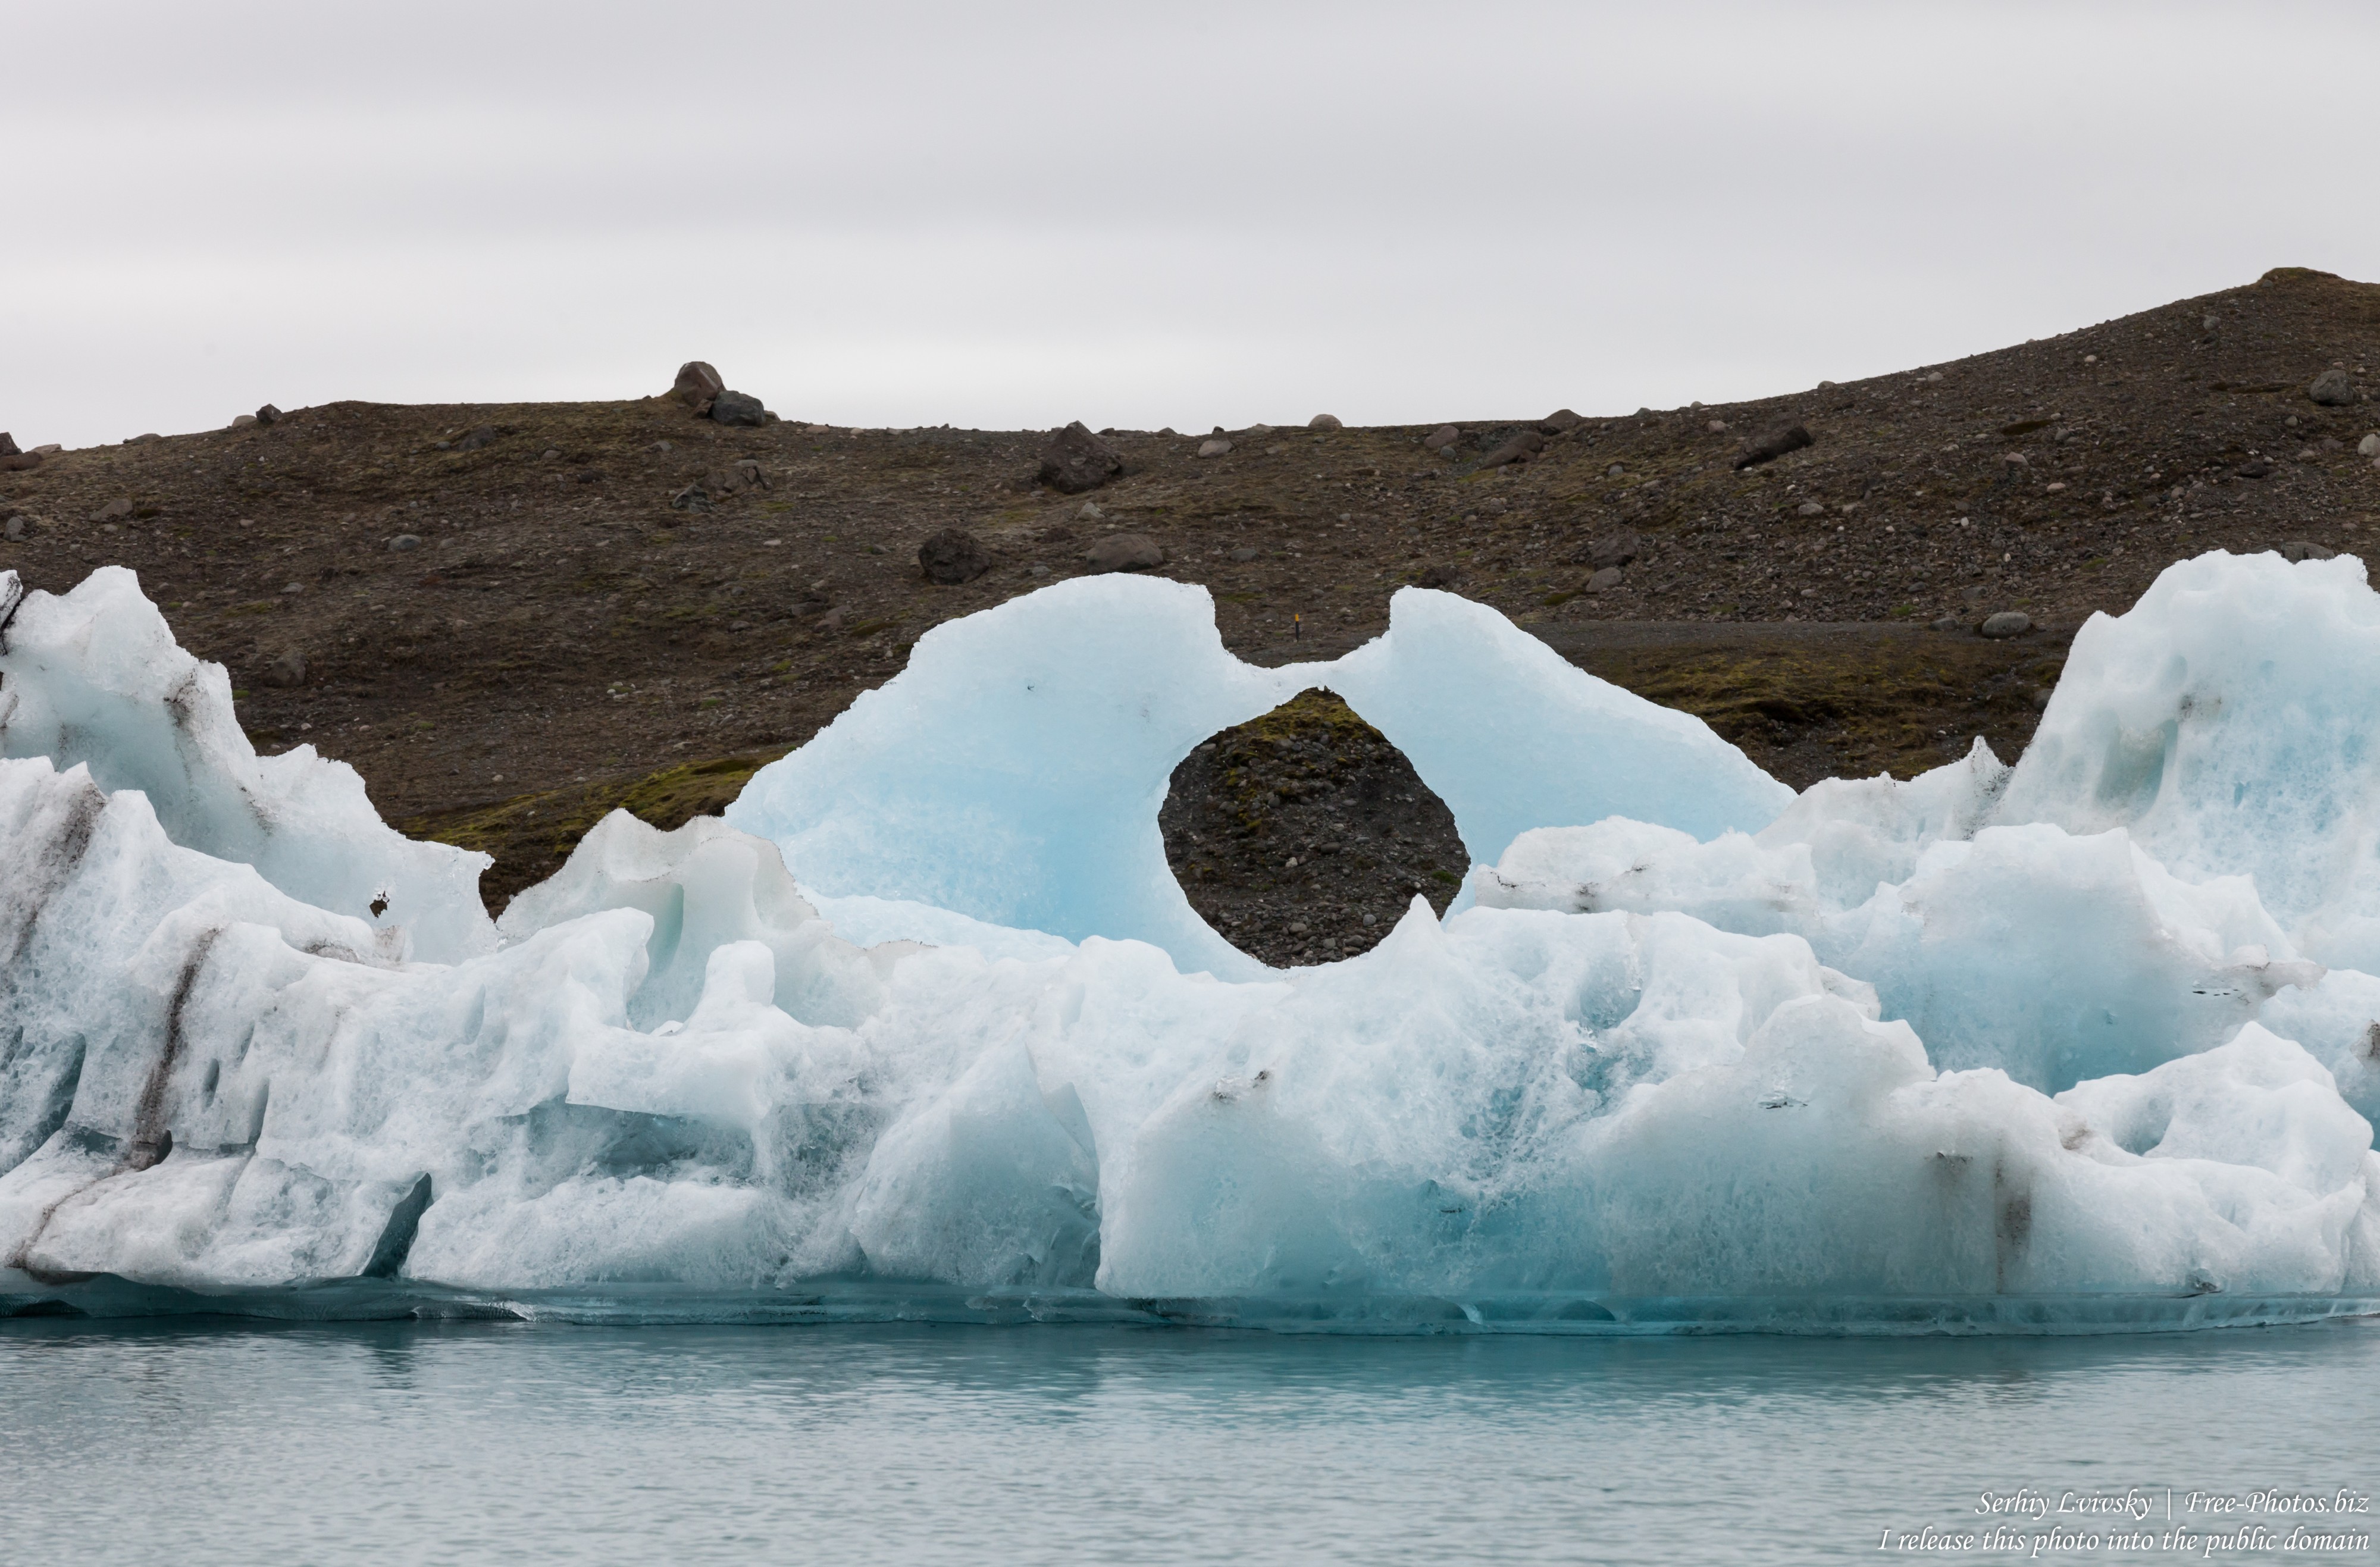 Jokulsarlon Glacier Lagoon, Iceland, photographed in May 2019 by Serhiy Lvivsky, photo 30